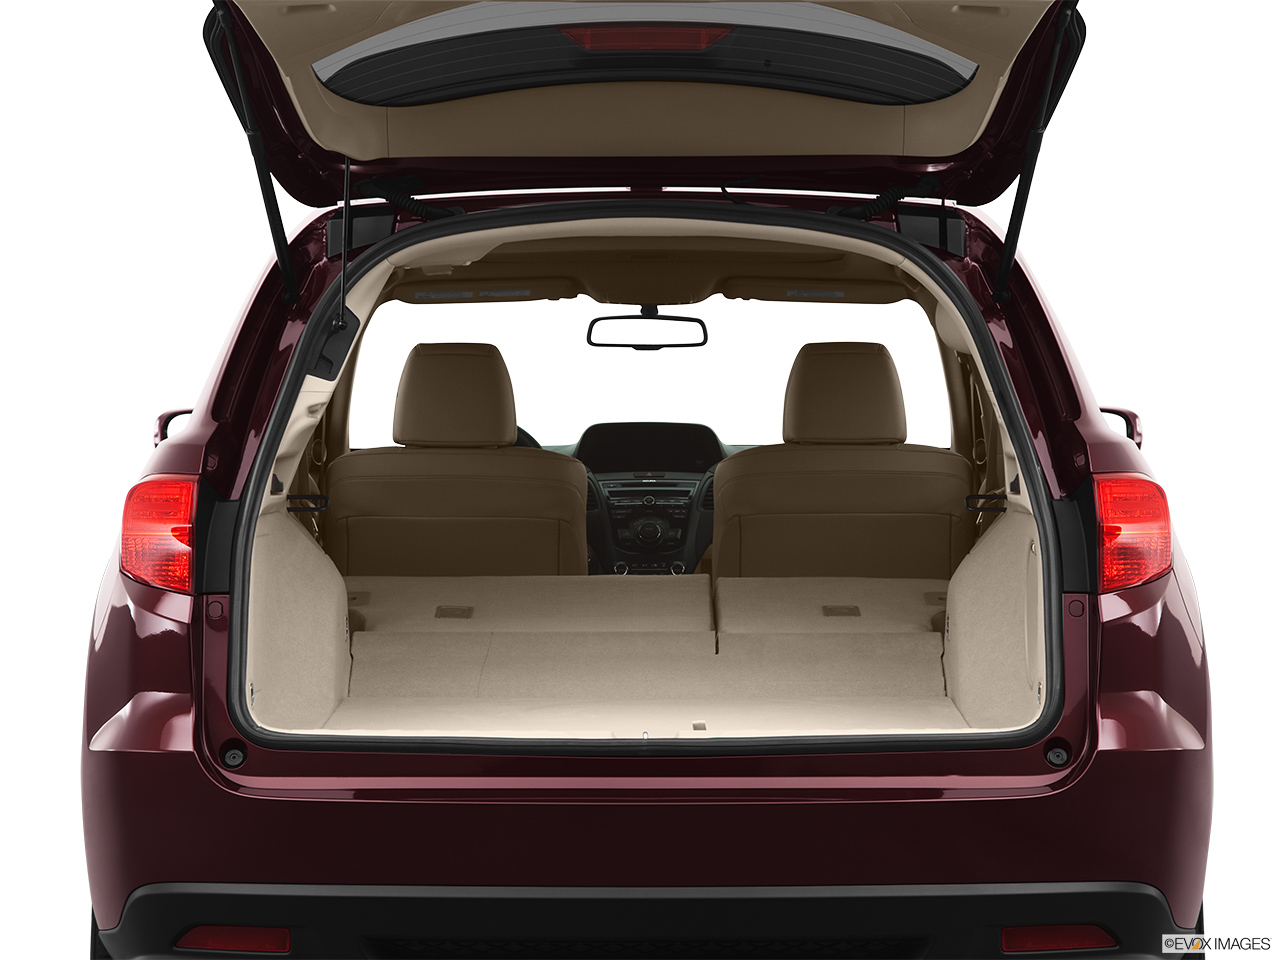 2013 Acura RDX AWD Hatchback & SUV rear angle. 